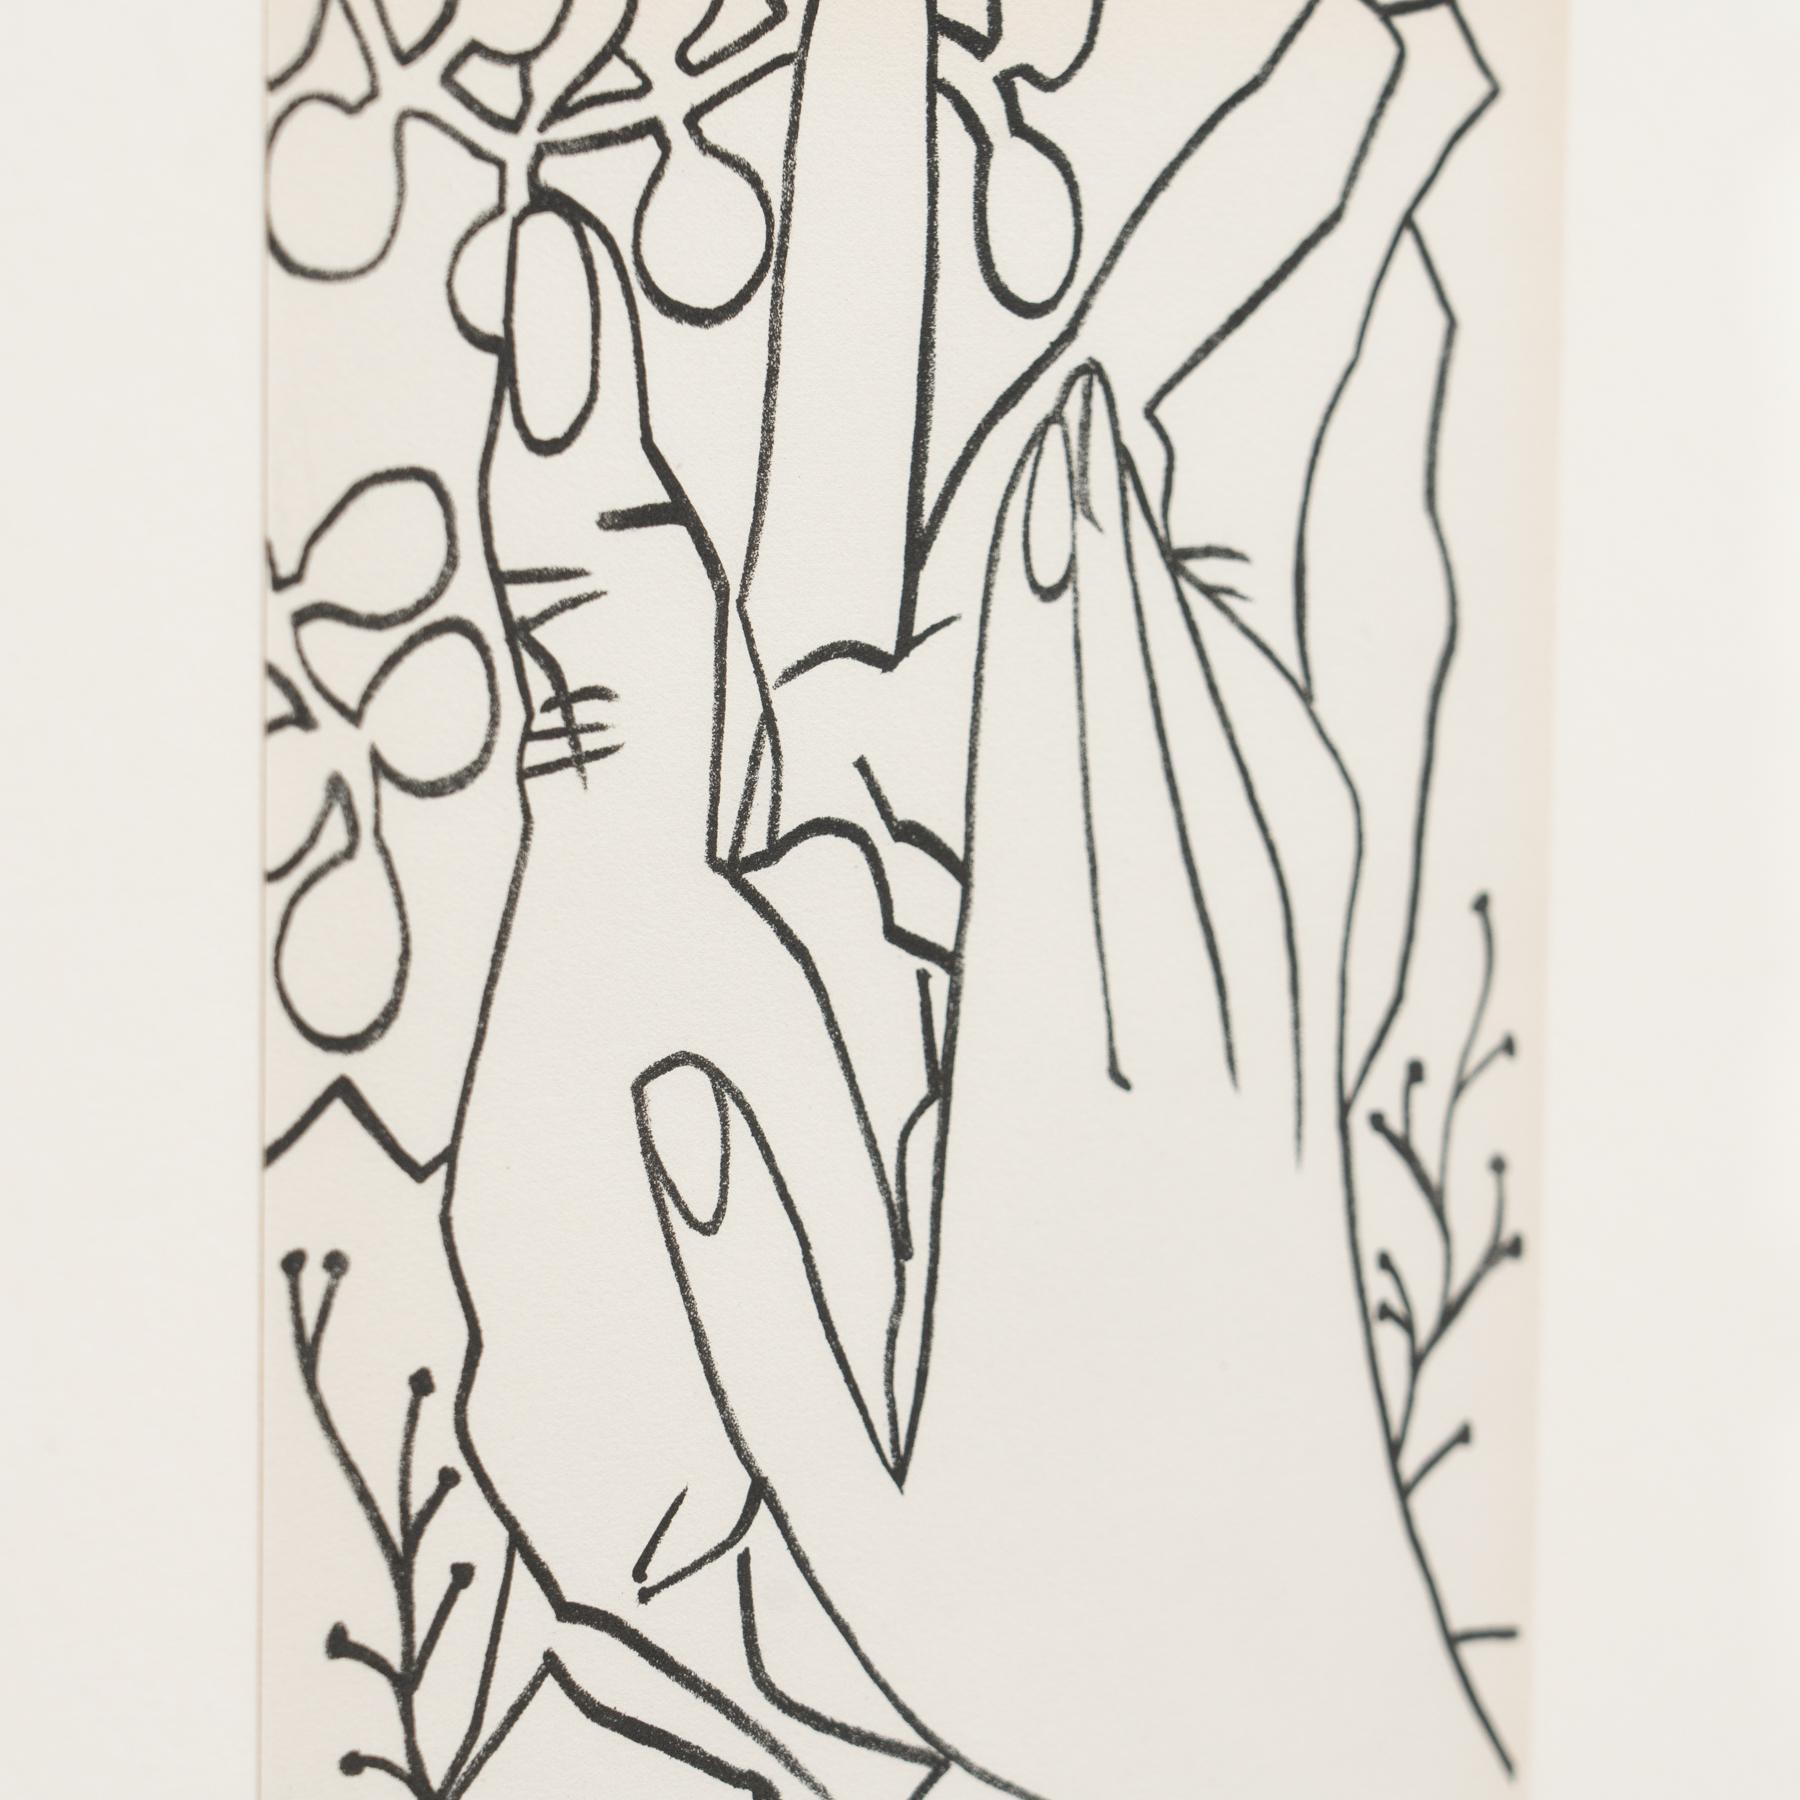 Françoise Gilot Lithograph 'The Caress', 1951 For Sale 5